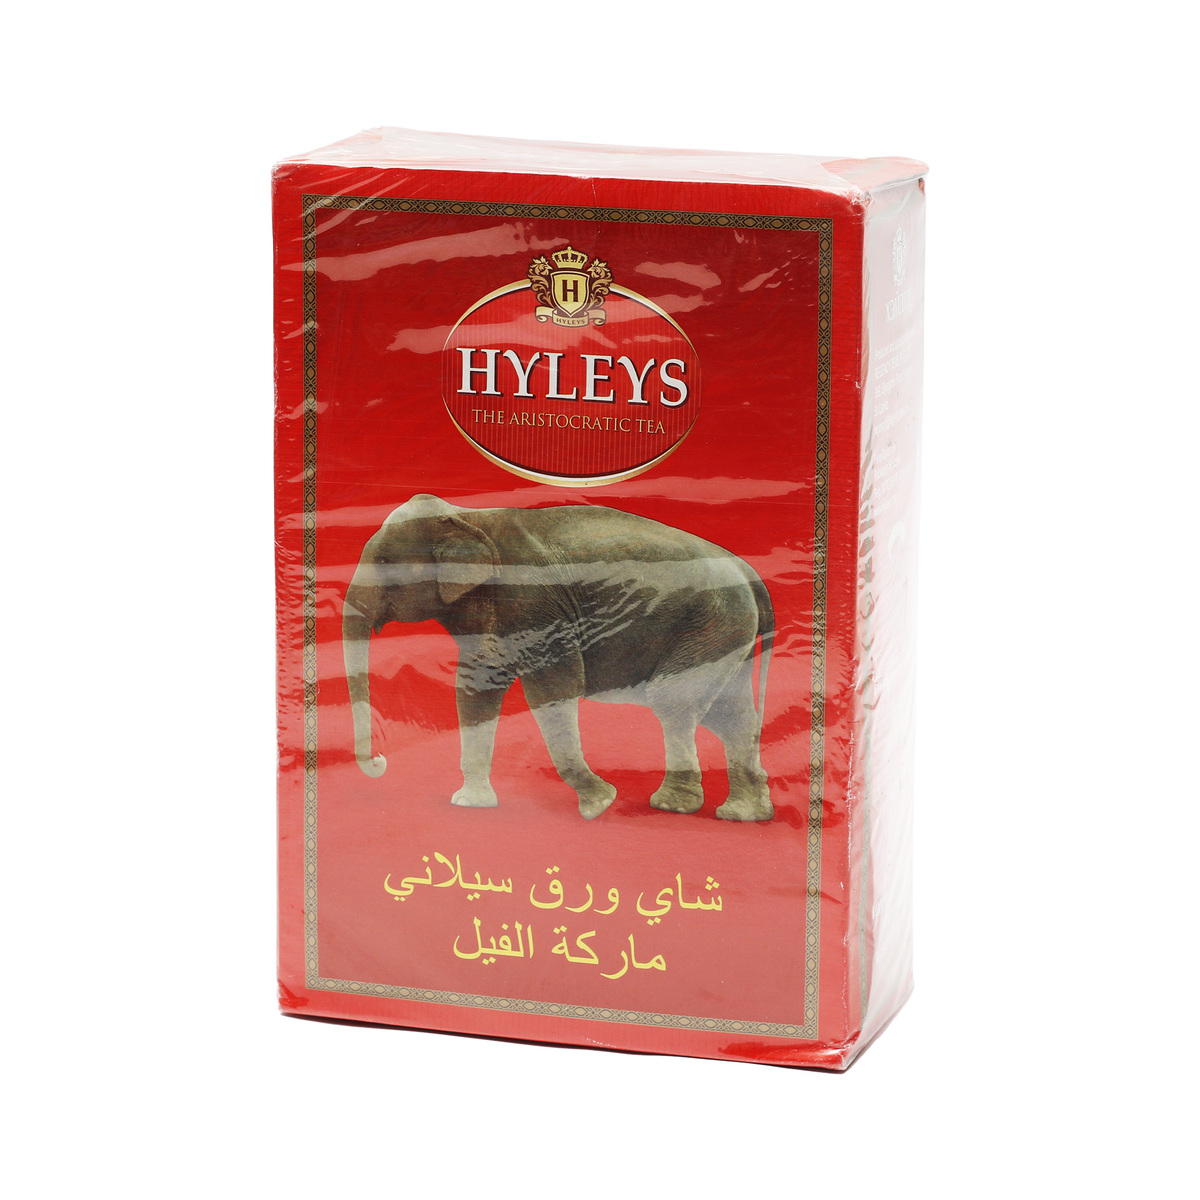 Hyleys Aristocratic Tea Big Leaf 450g